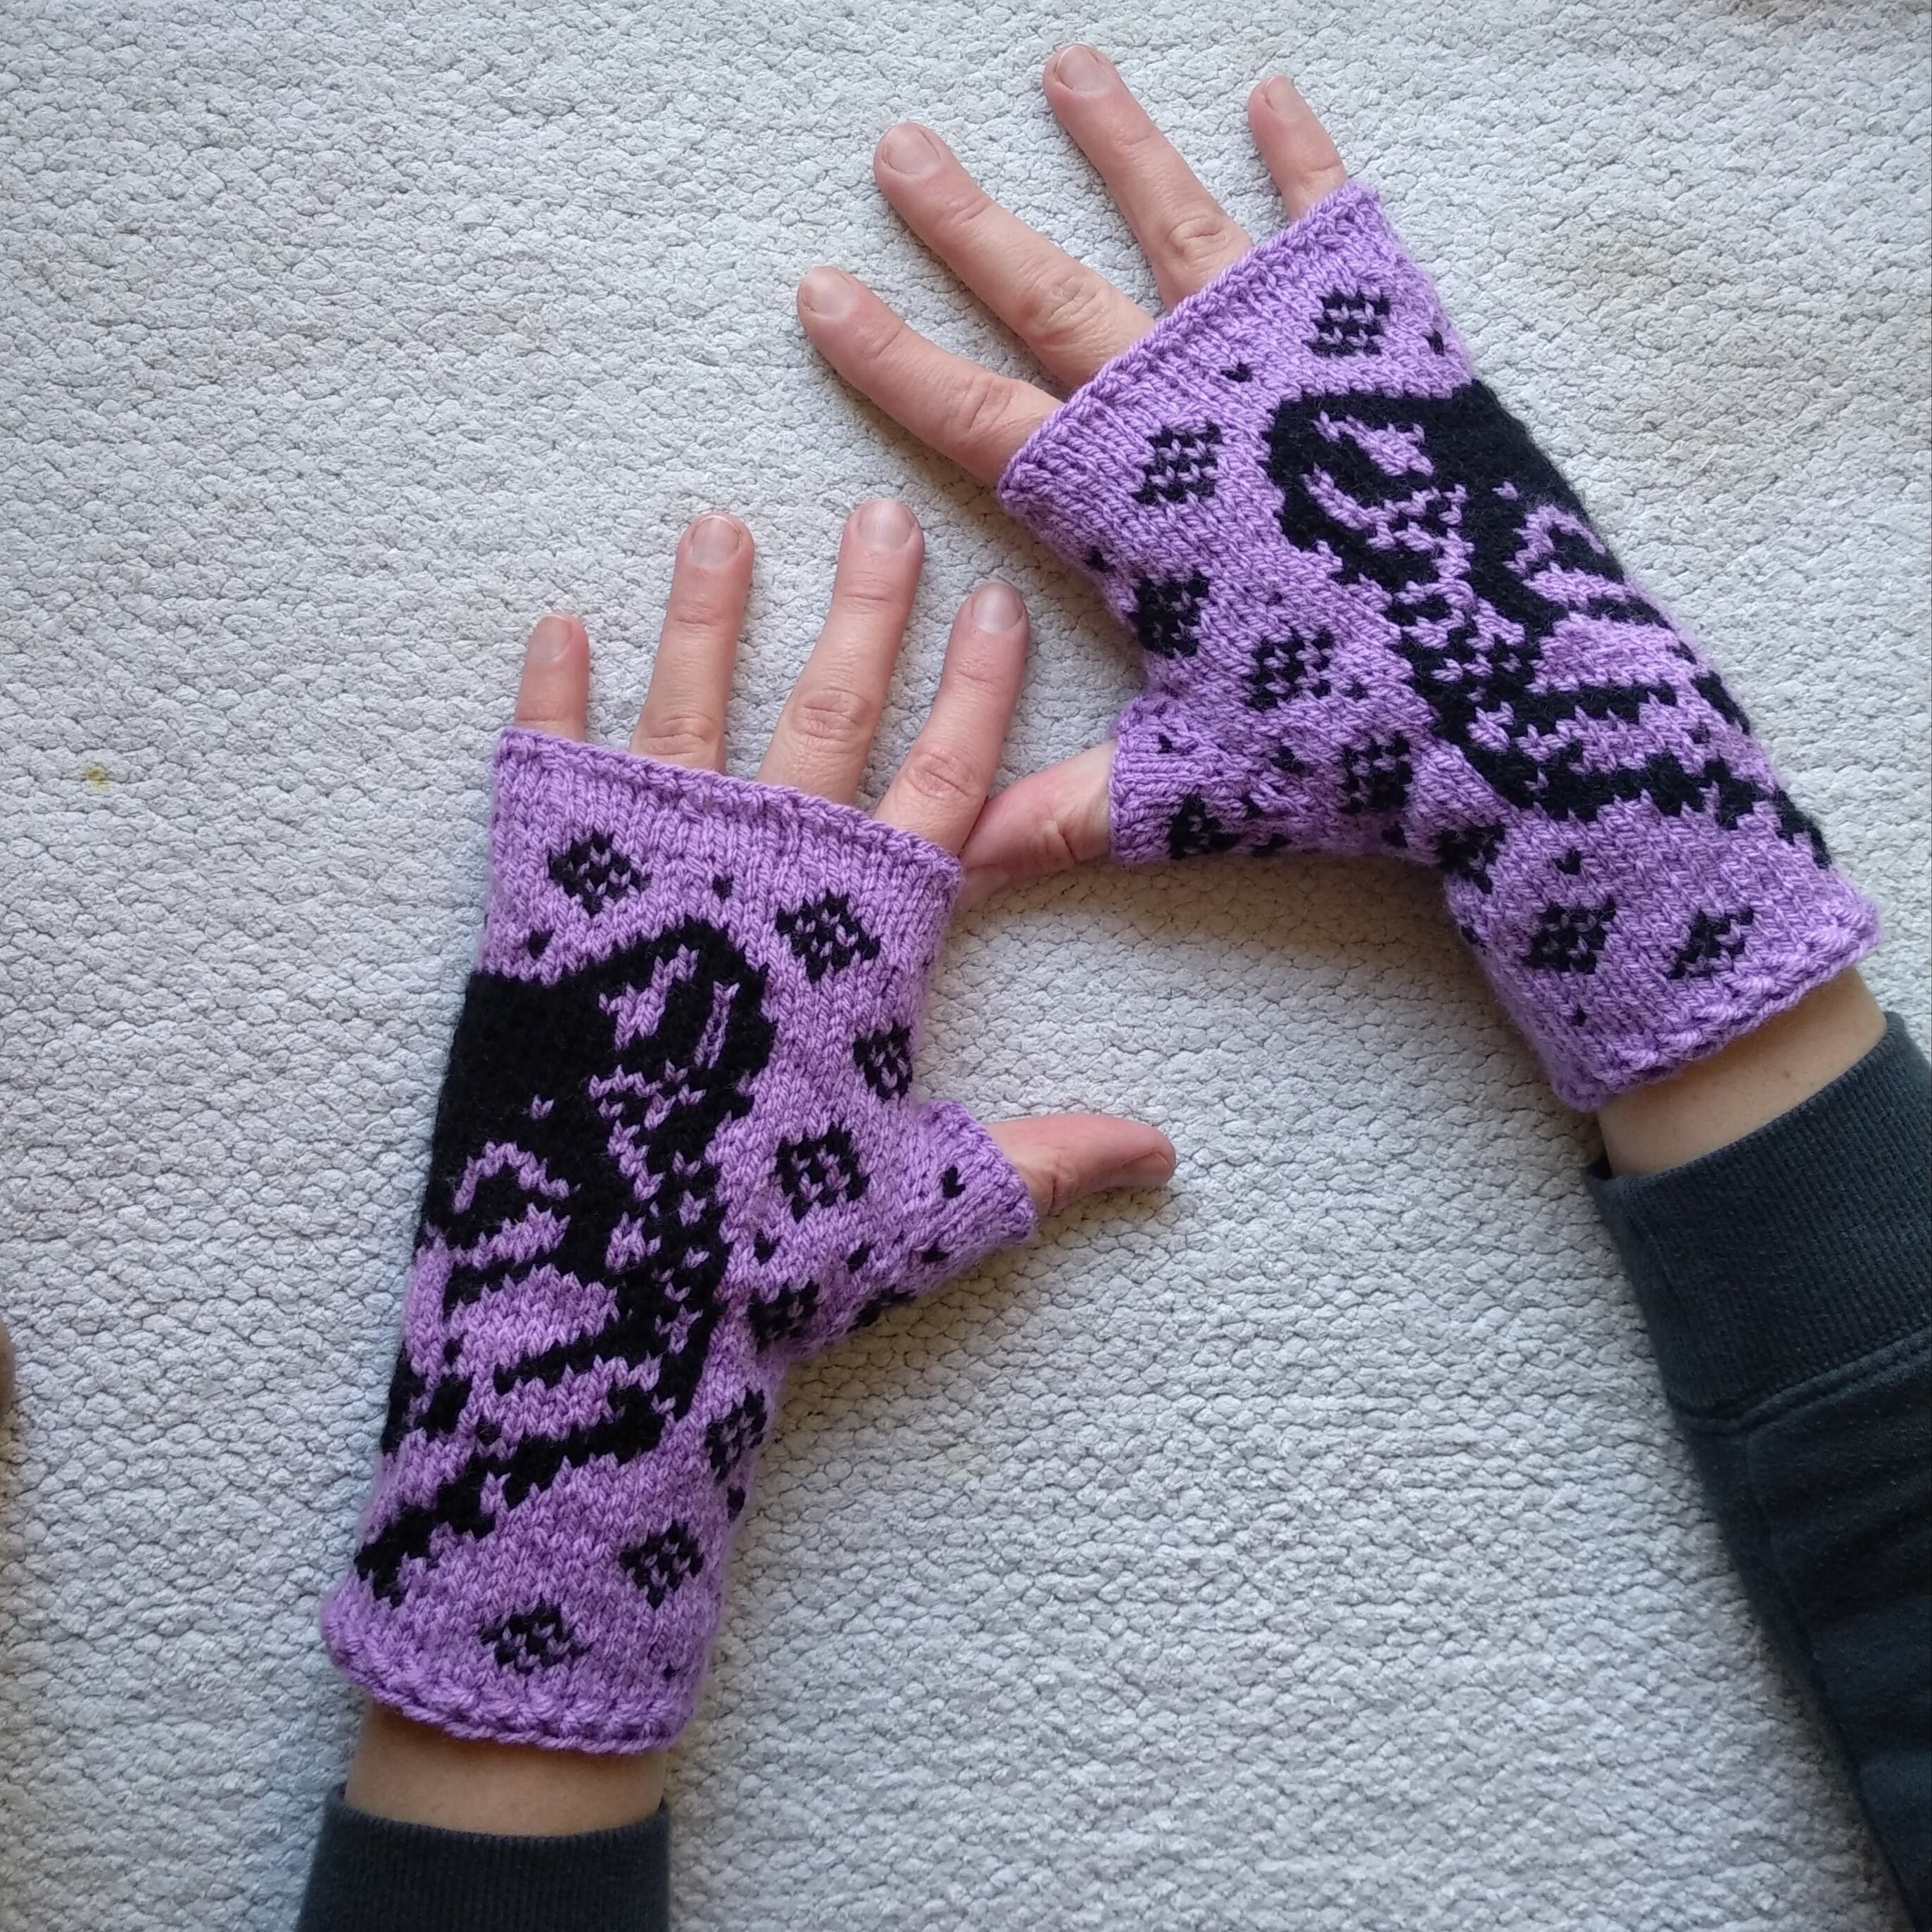 prowling wolf dog Wrist warmers fingerless gloves